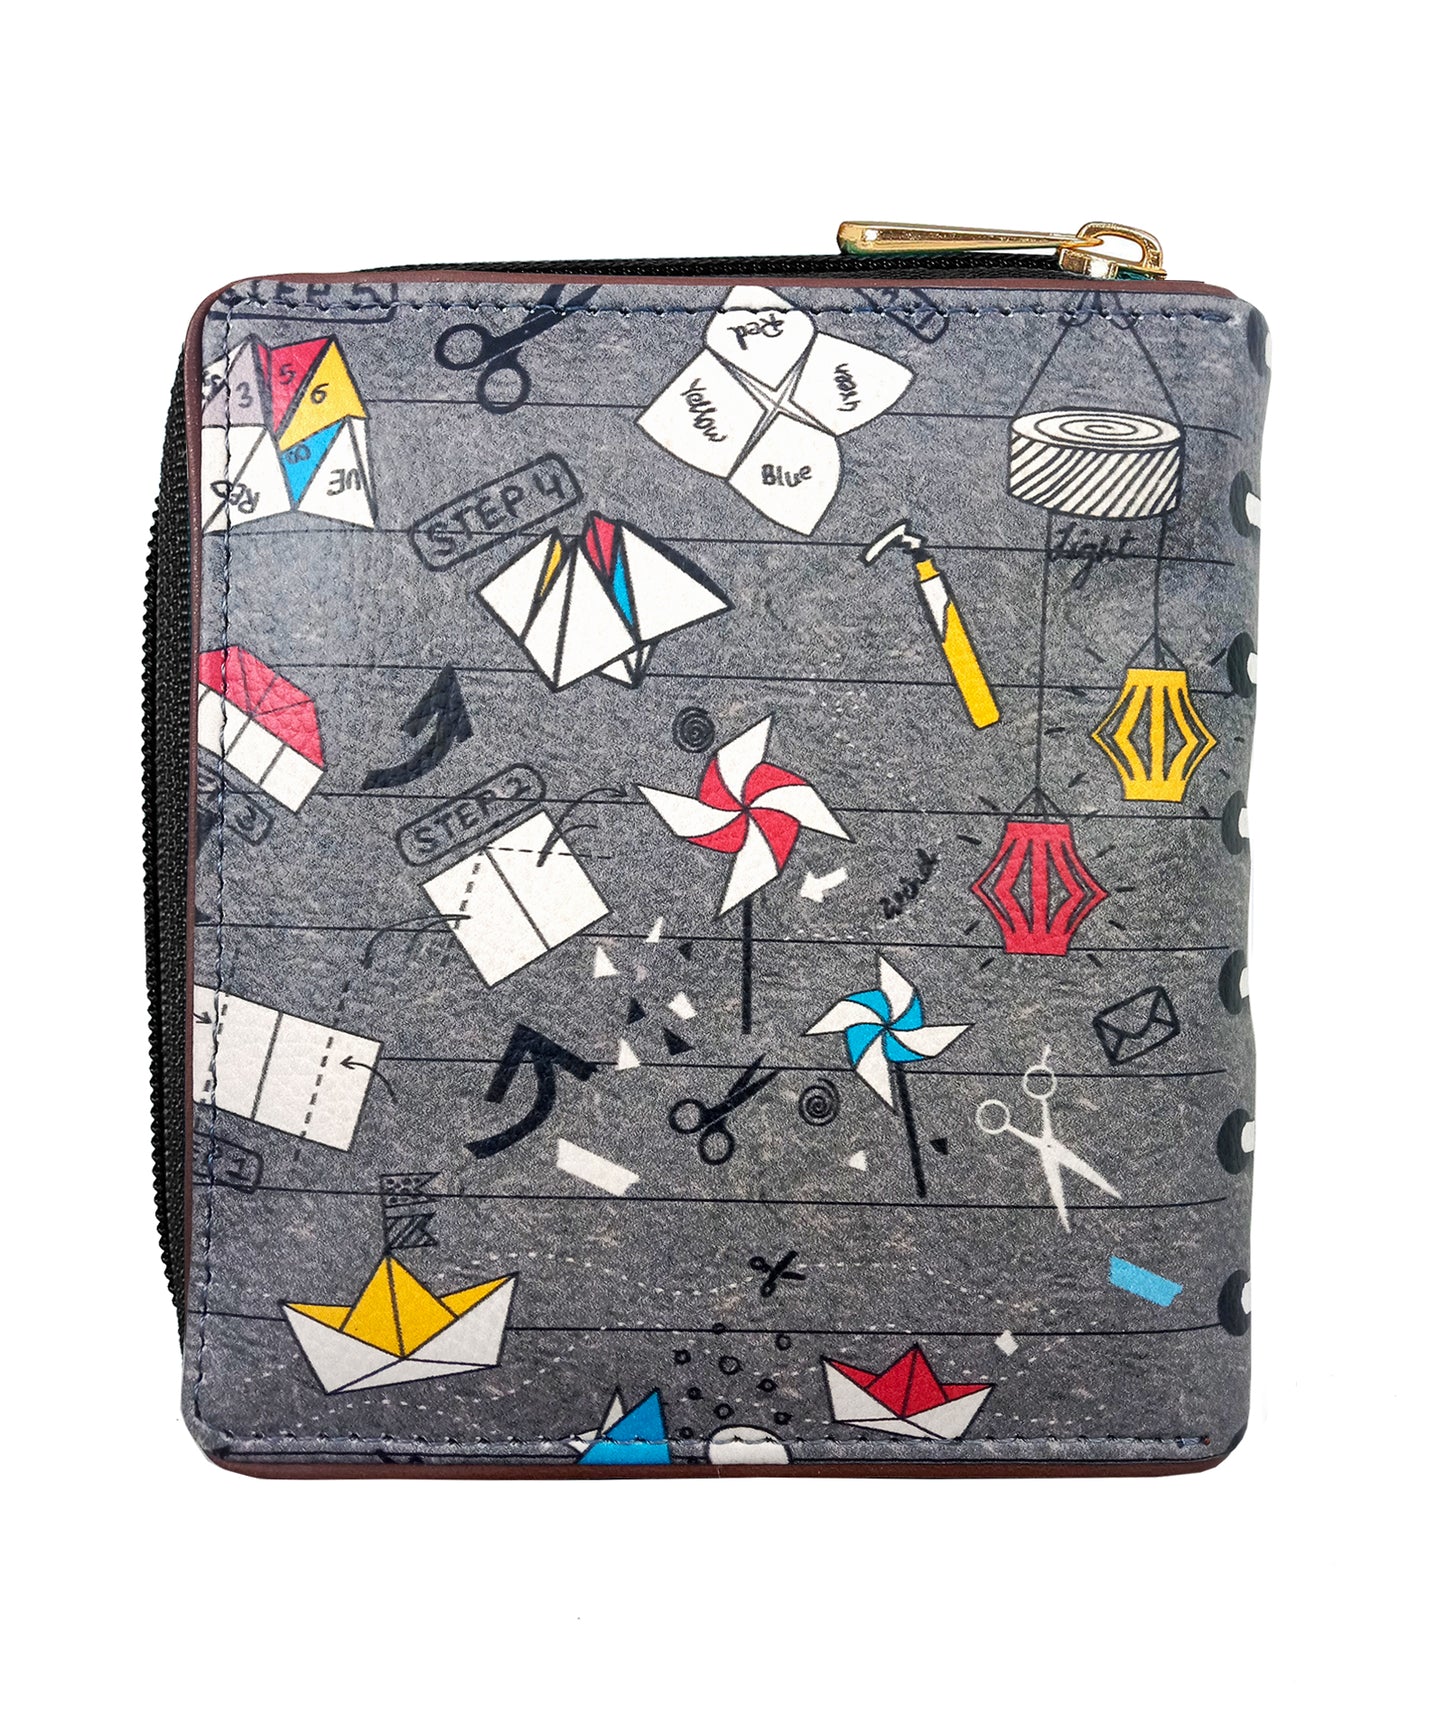 Combo Offers : Origami Laptop White Handbag & Loop Grey Wallet